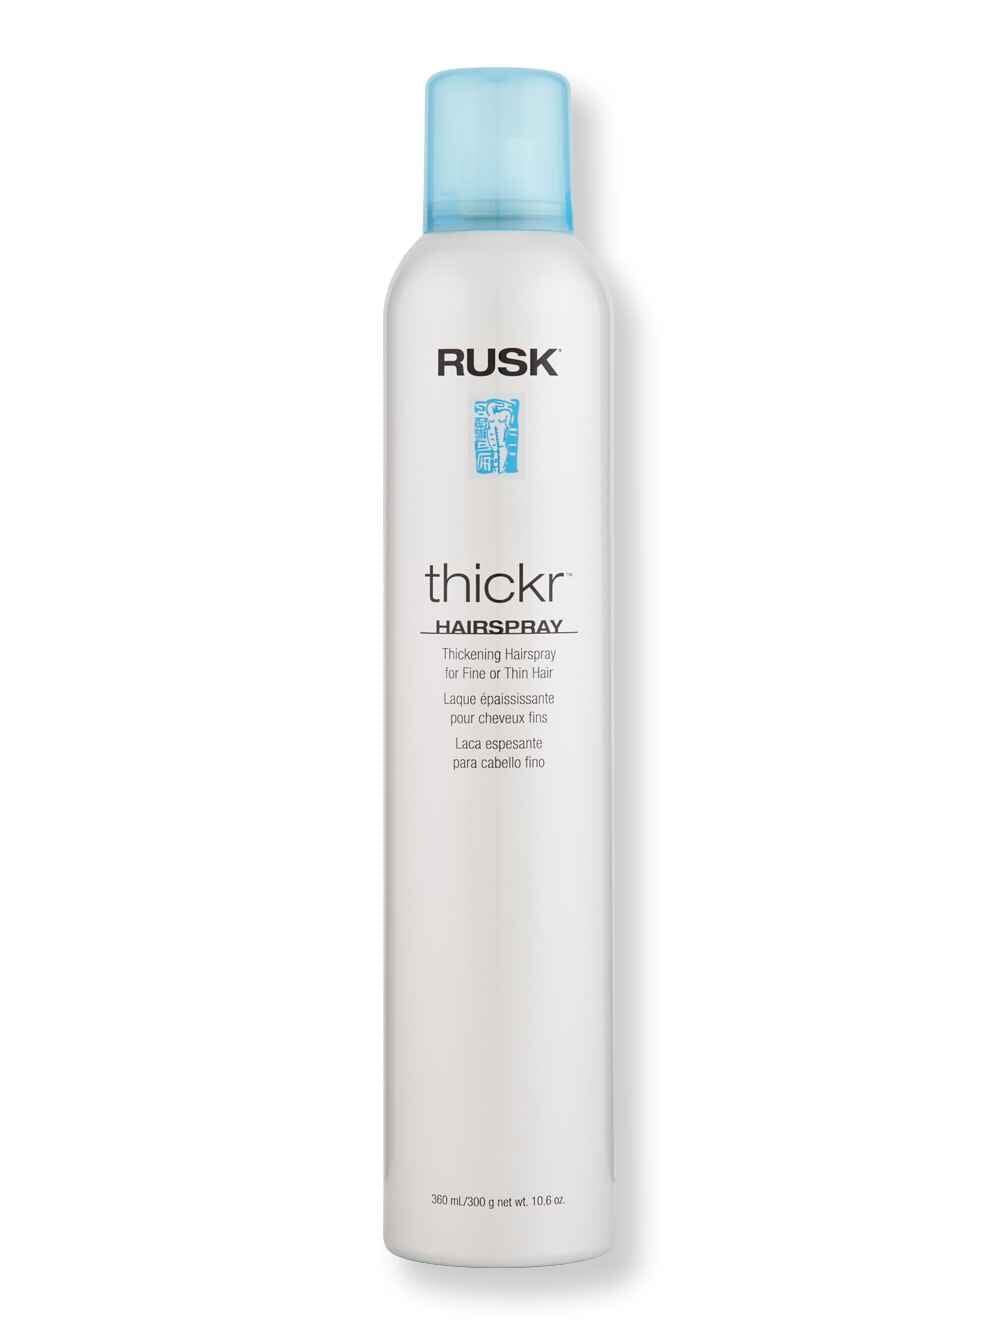 Rusk Rusk Thickr Thickening Hairspray 55% VOC 10.6 oz Hair Sprays 